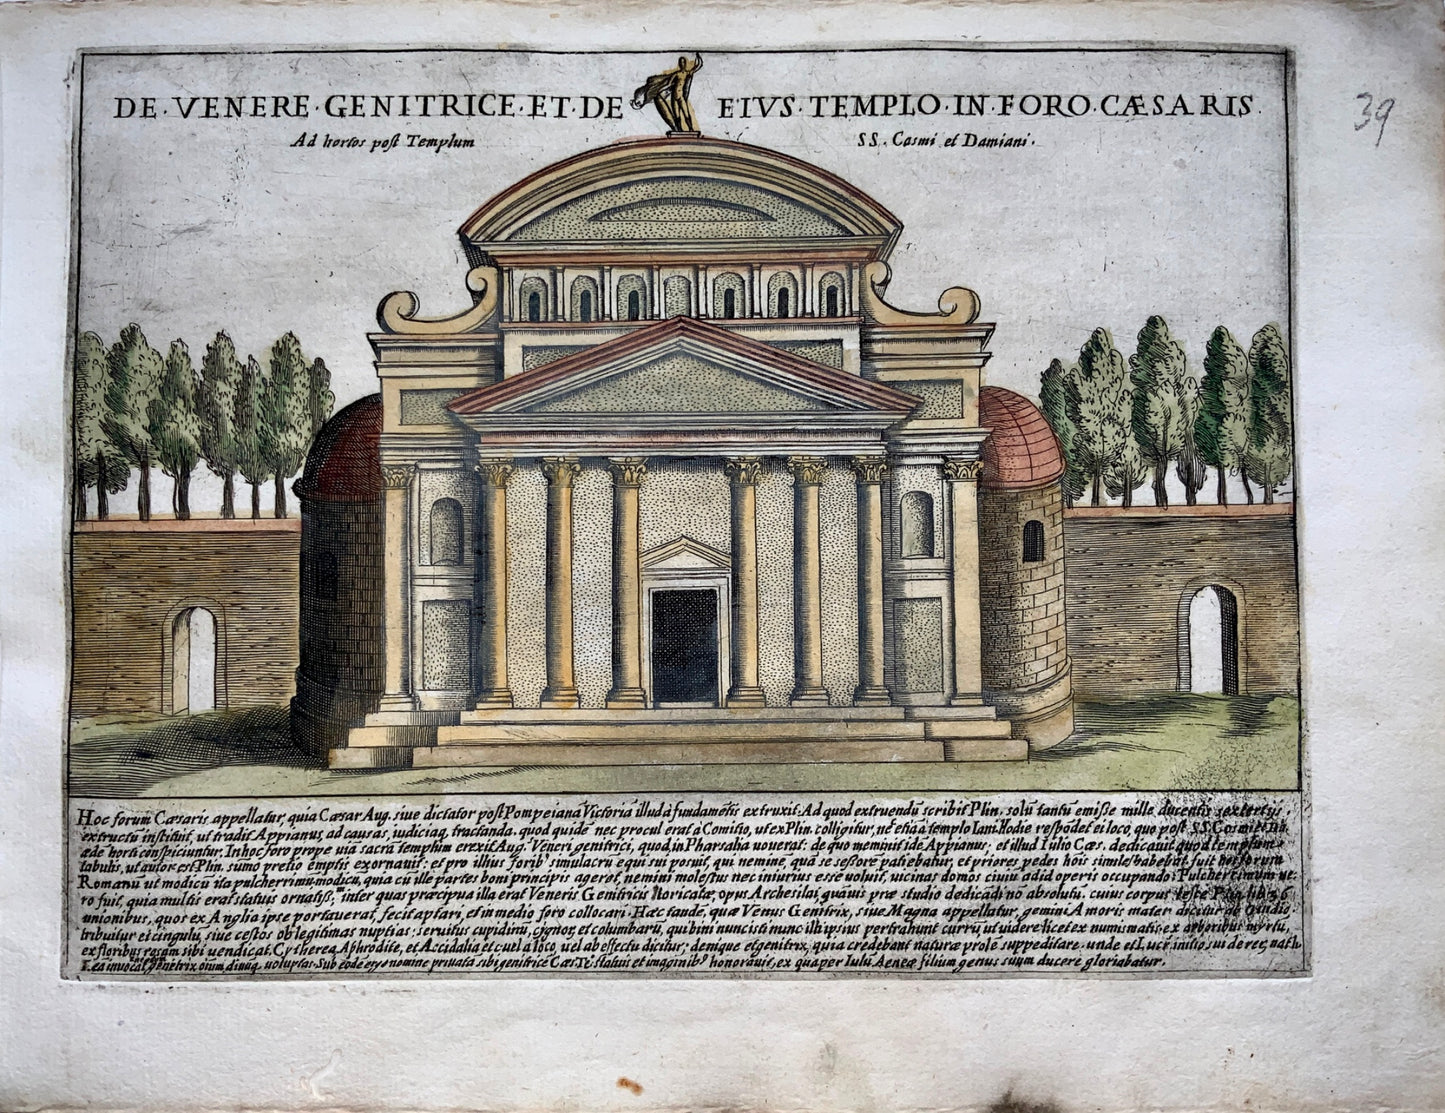 1624 G. Laurus - SCARCE 1st ISSUE Temple of Venus Genetrix, Rome Italy - Classical architecture